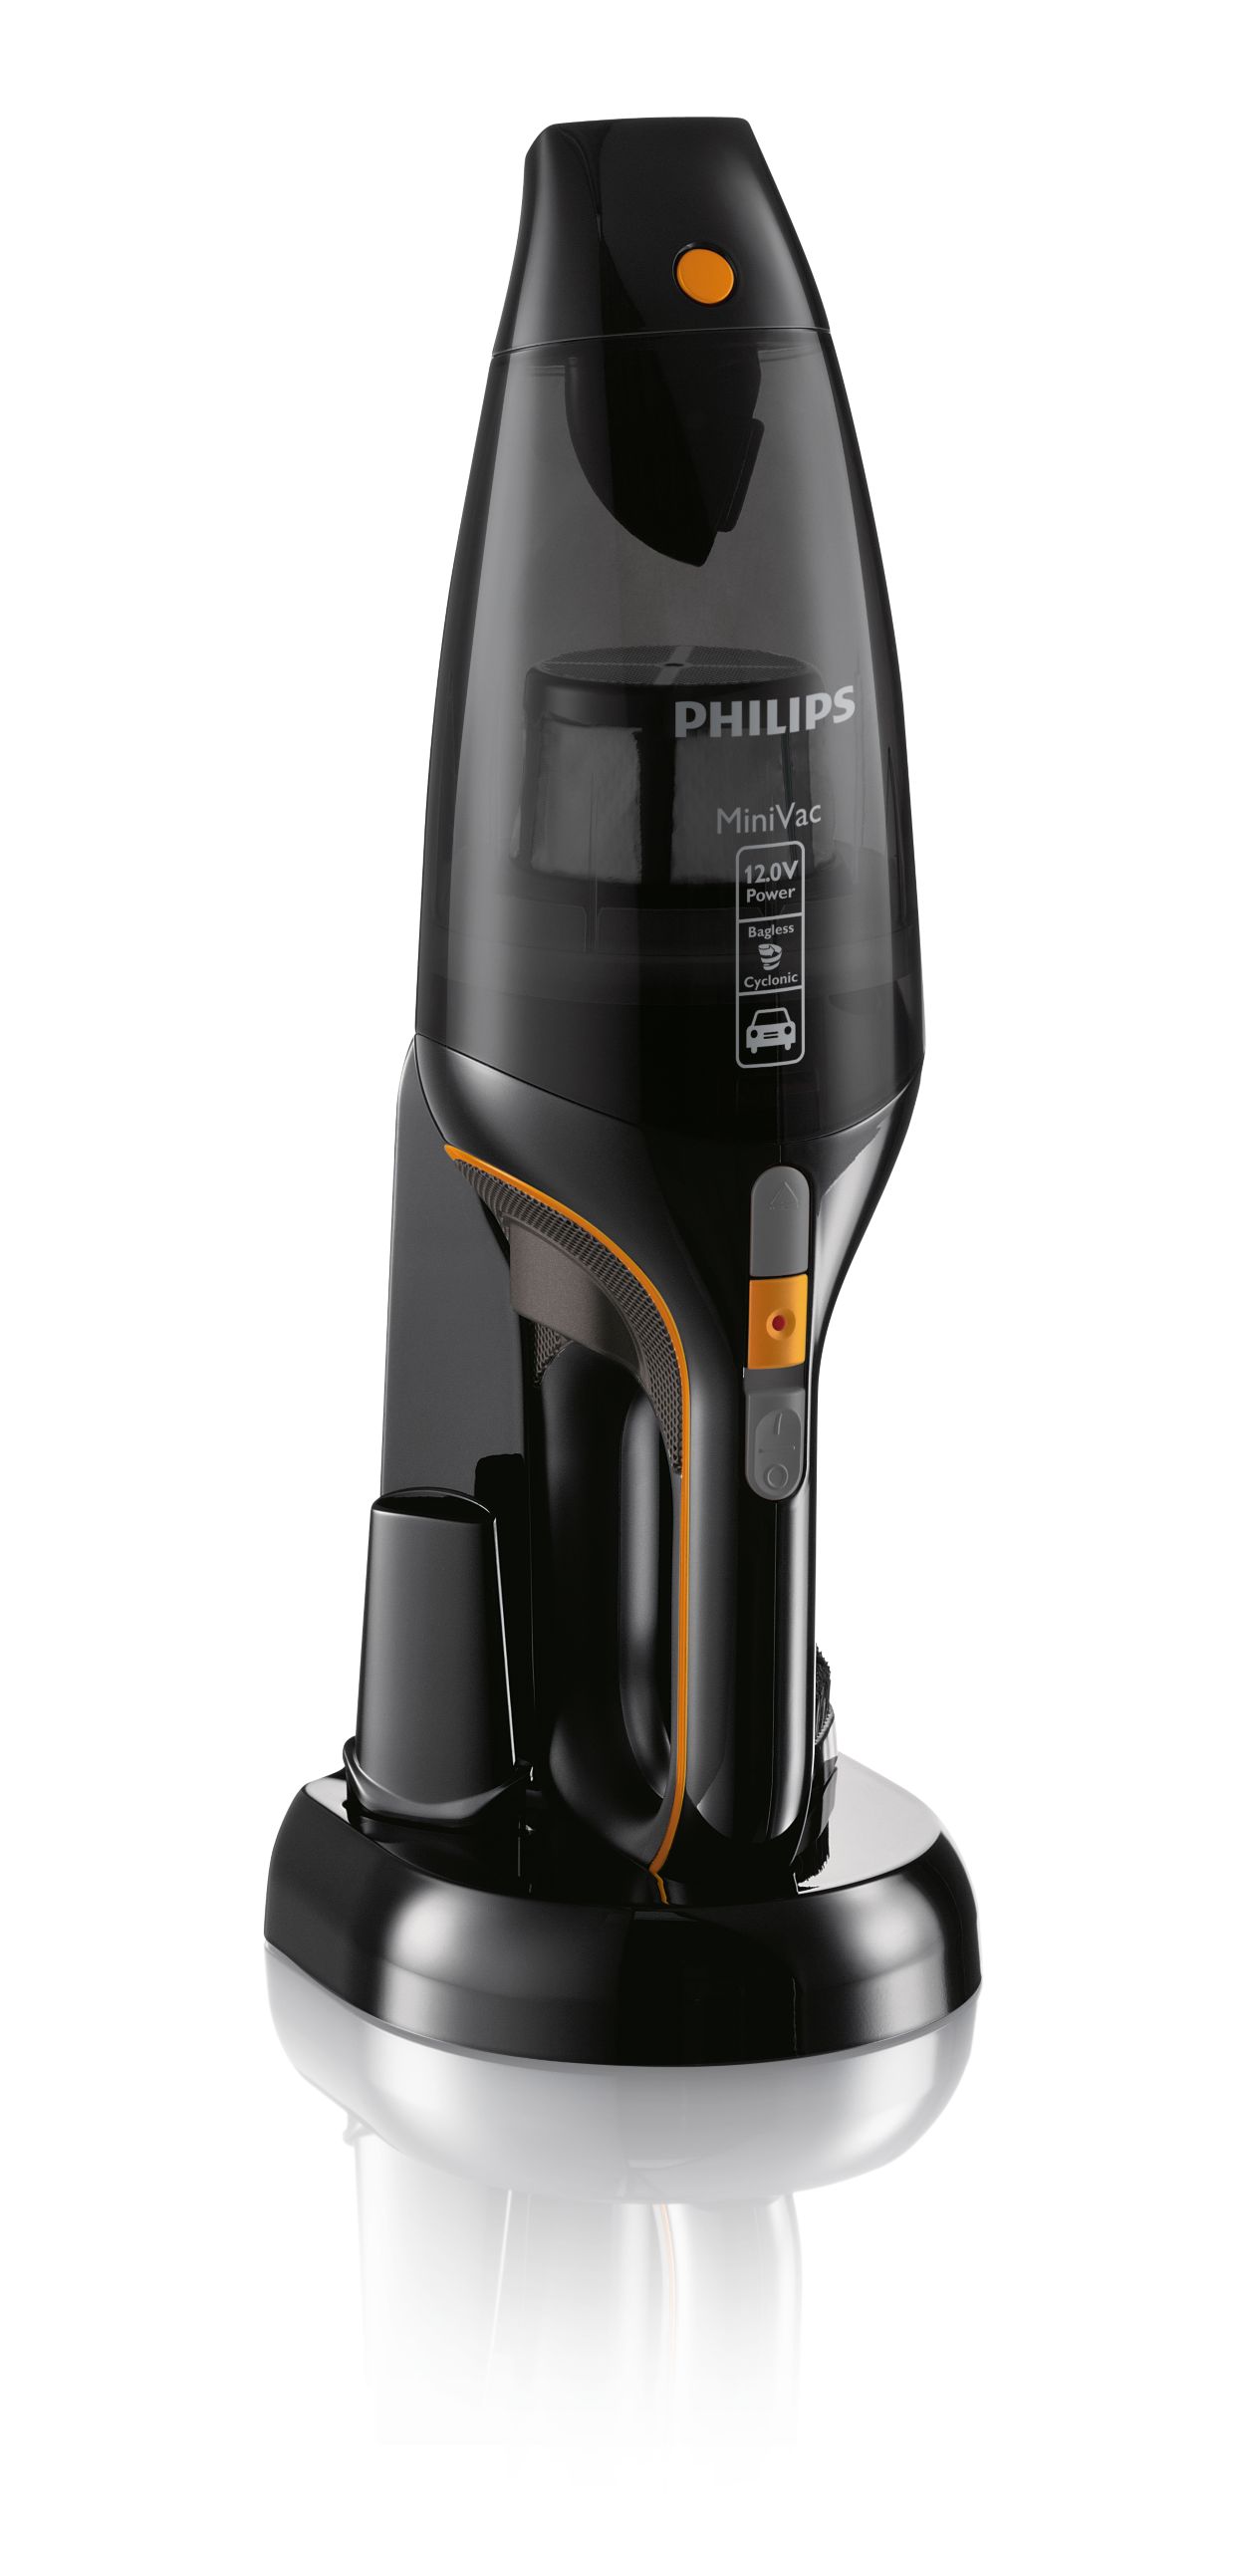 cleaner | Handheld Philips FC6149/02 MiniVac vacuum